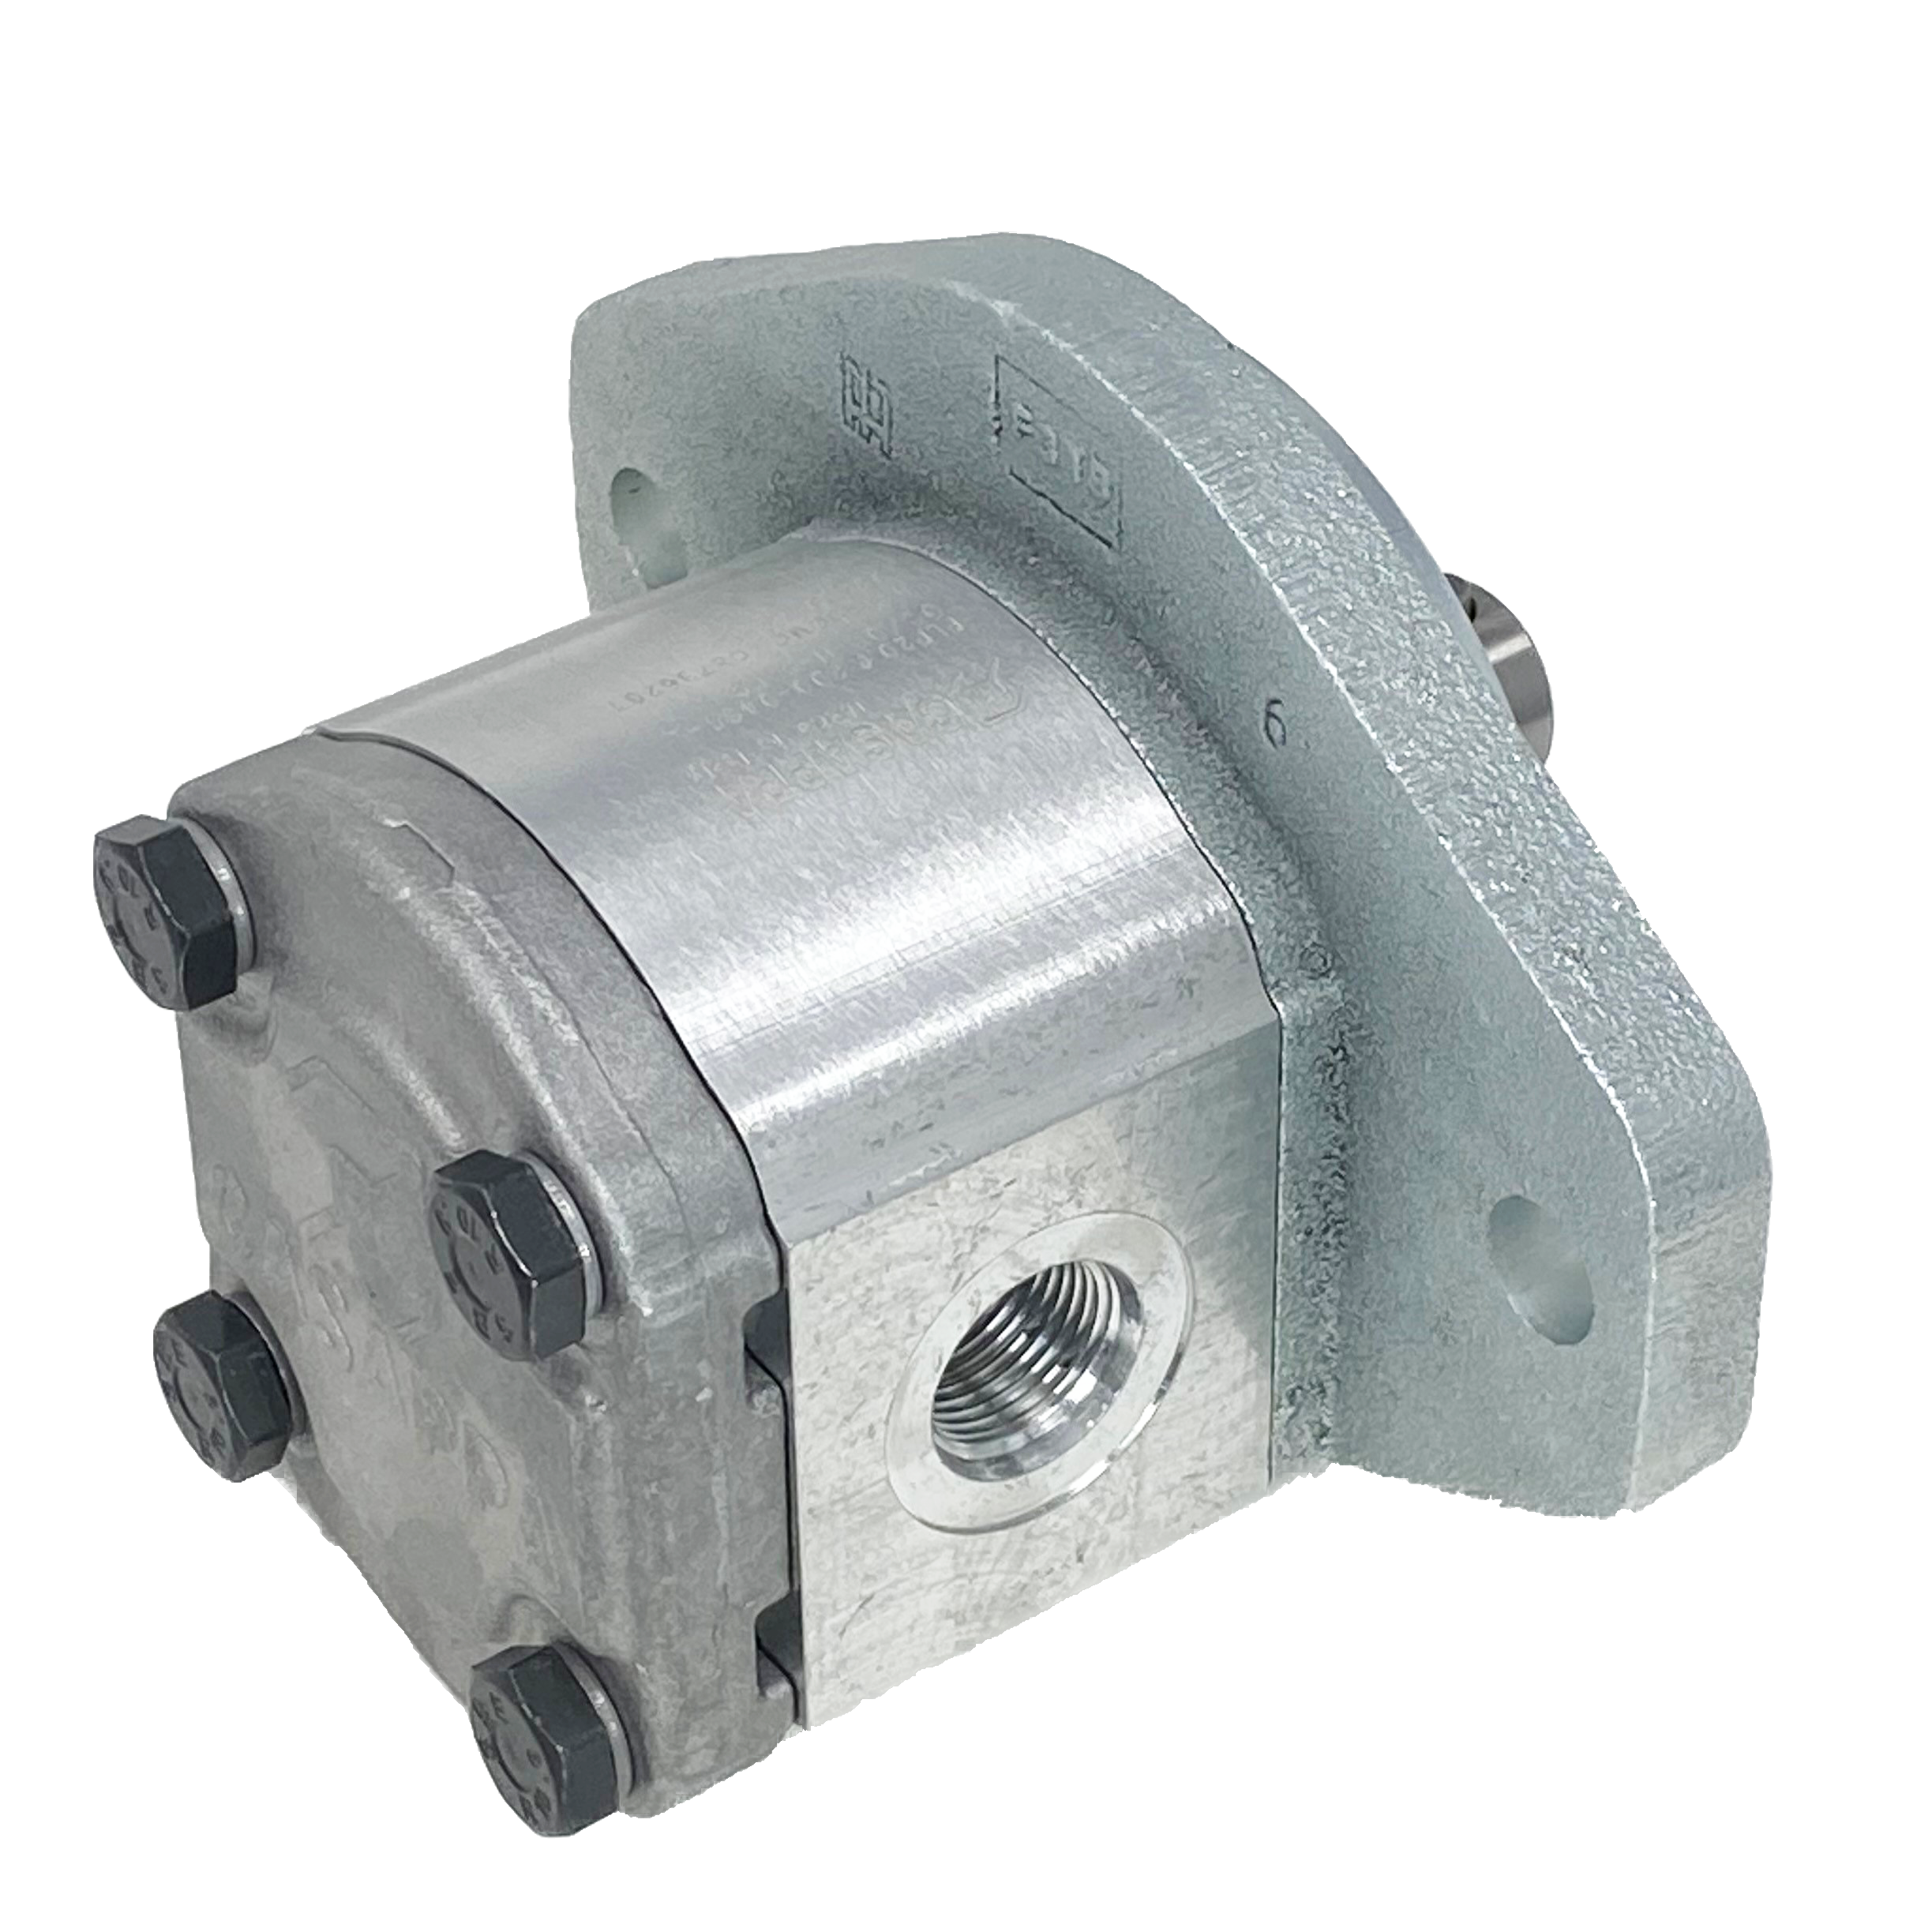 PLM20.6,3R0-32S5-LOC/OC-N-L : Casappa Polaris Gear Motor, 6.61cc, 3625psi, 4000RPM, Reversible, External Drain, 3/4" Bore x 1/4" Key Shaft, SAE B 2-Bolt Flange, 0.625 (5/8") #10 SAE In, 0.625 (5/8") #10 SAE Out, Aluminum Body, Cast Iron Flange